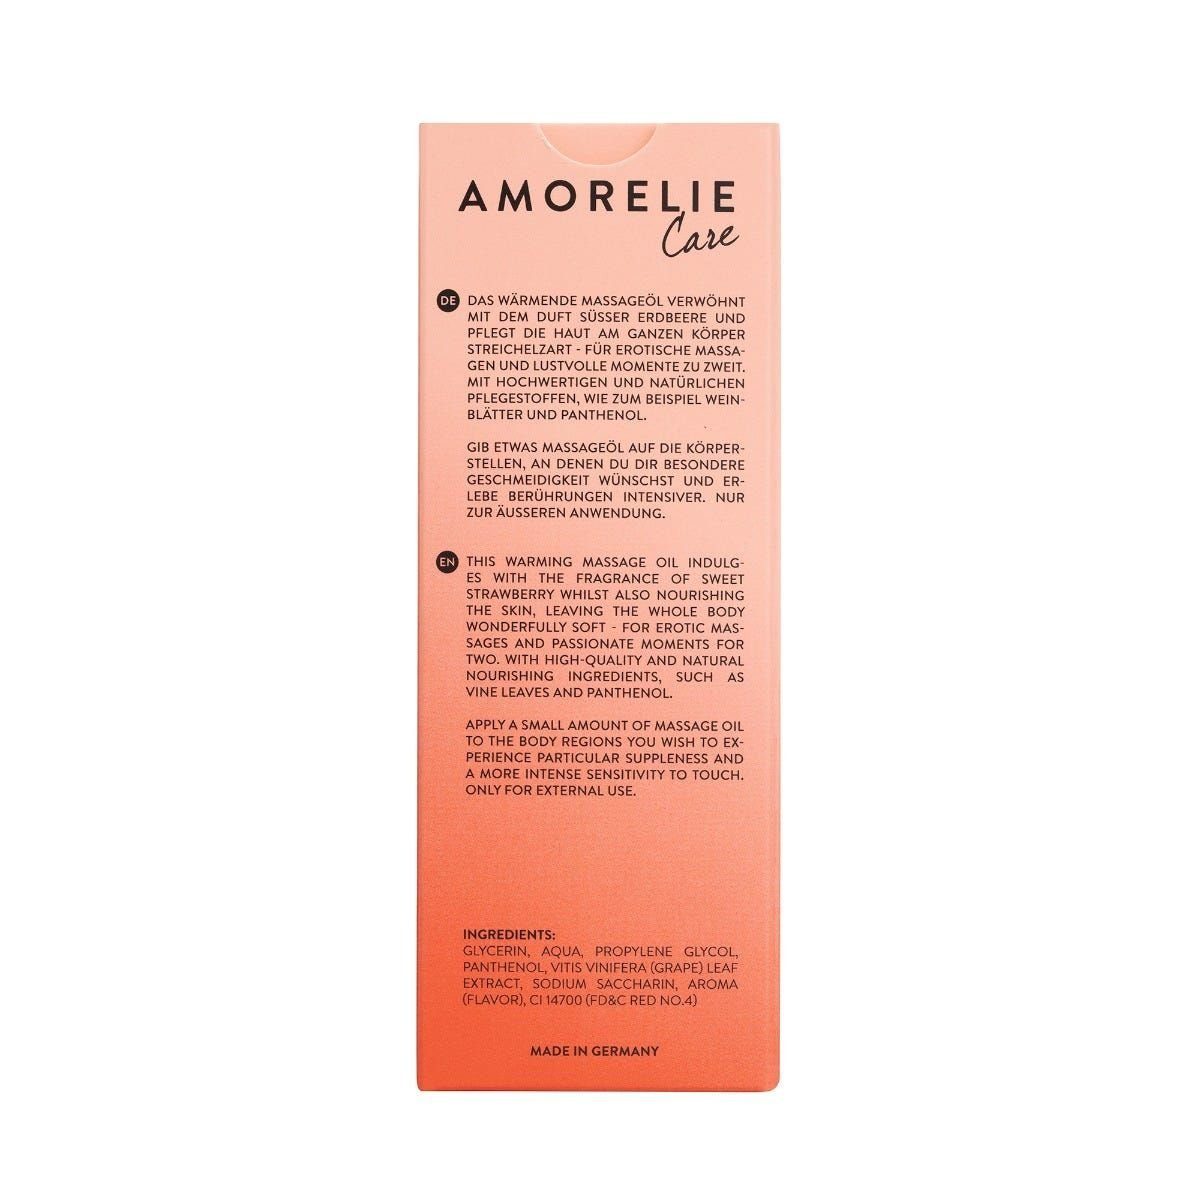 AMORELIE Care Massageöl Wärmendes Massageöl ml, AMC Erdbeere -100 1-tlg., Erdbeere